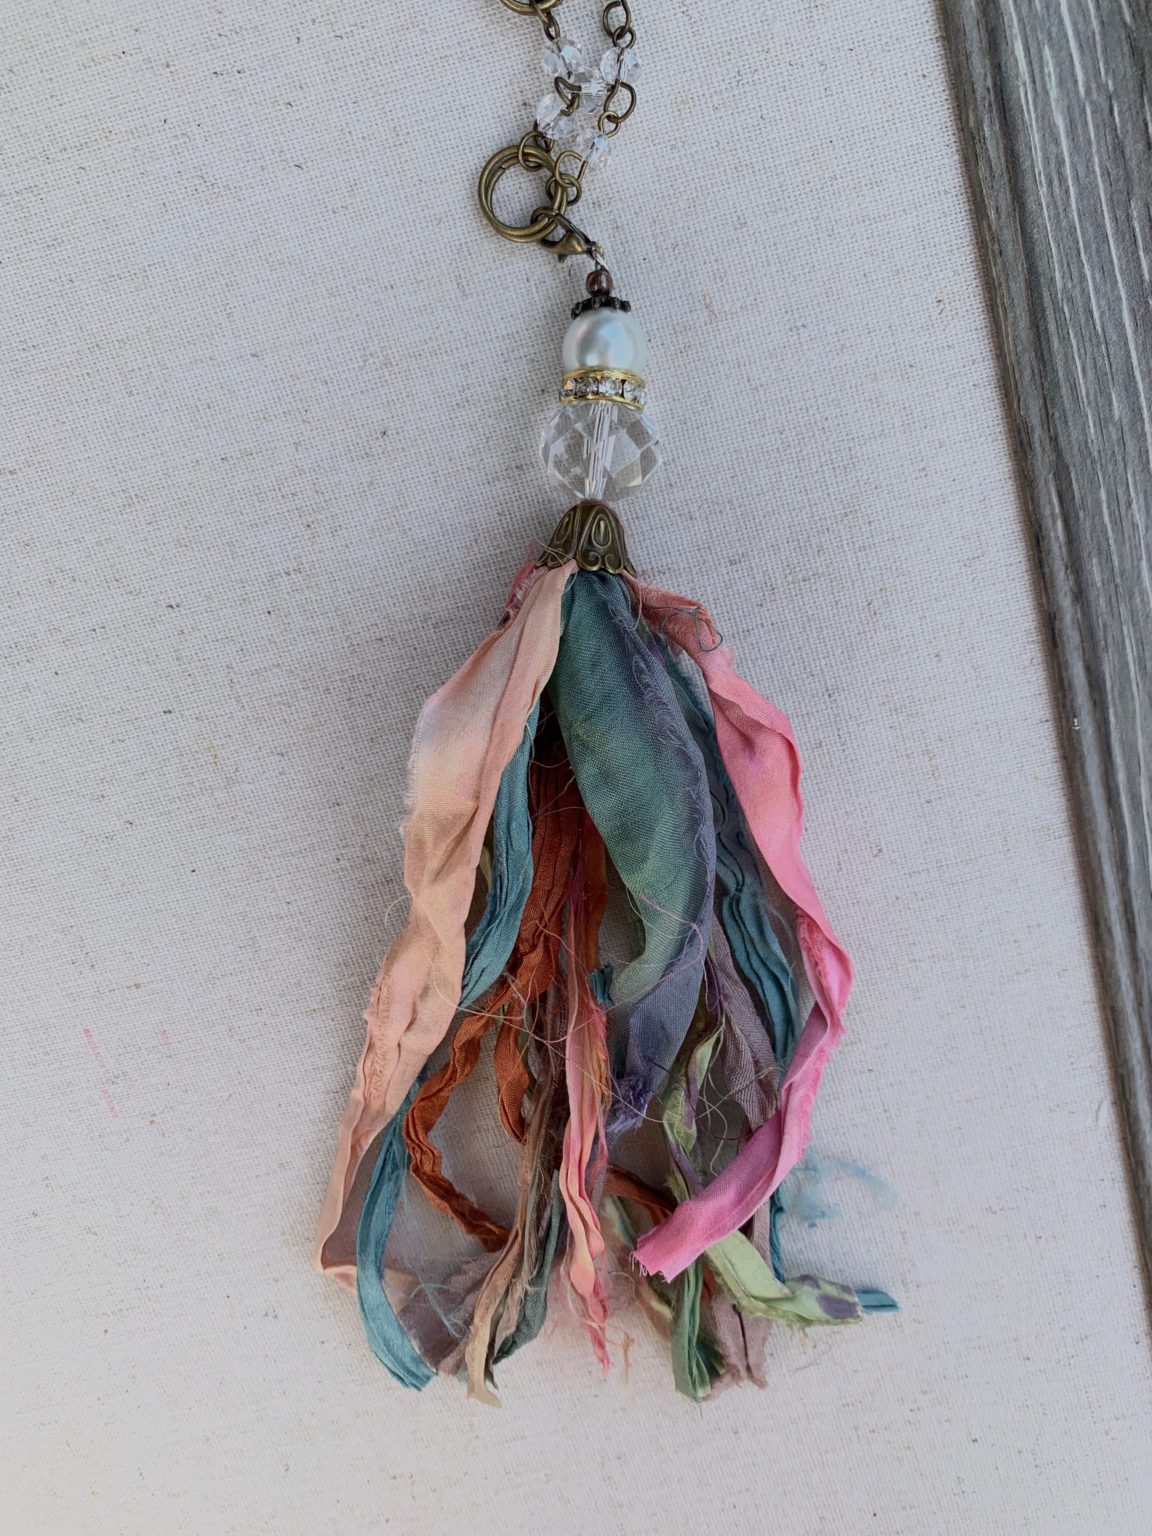 Handmade Rainbow Tassel Necklace On Beaded Chain - The Shabby Tree